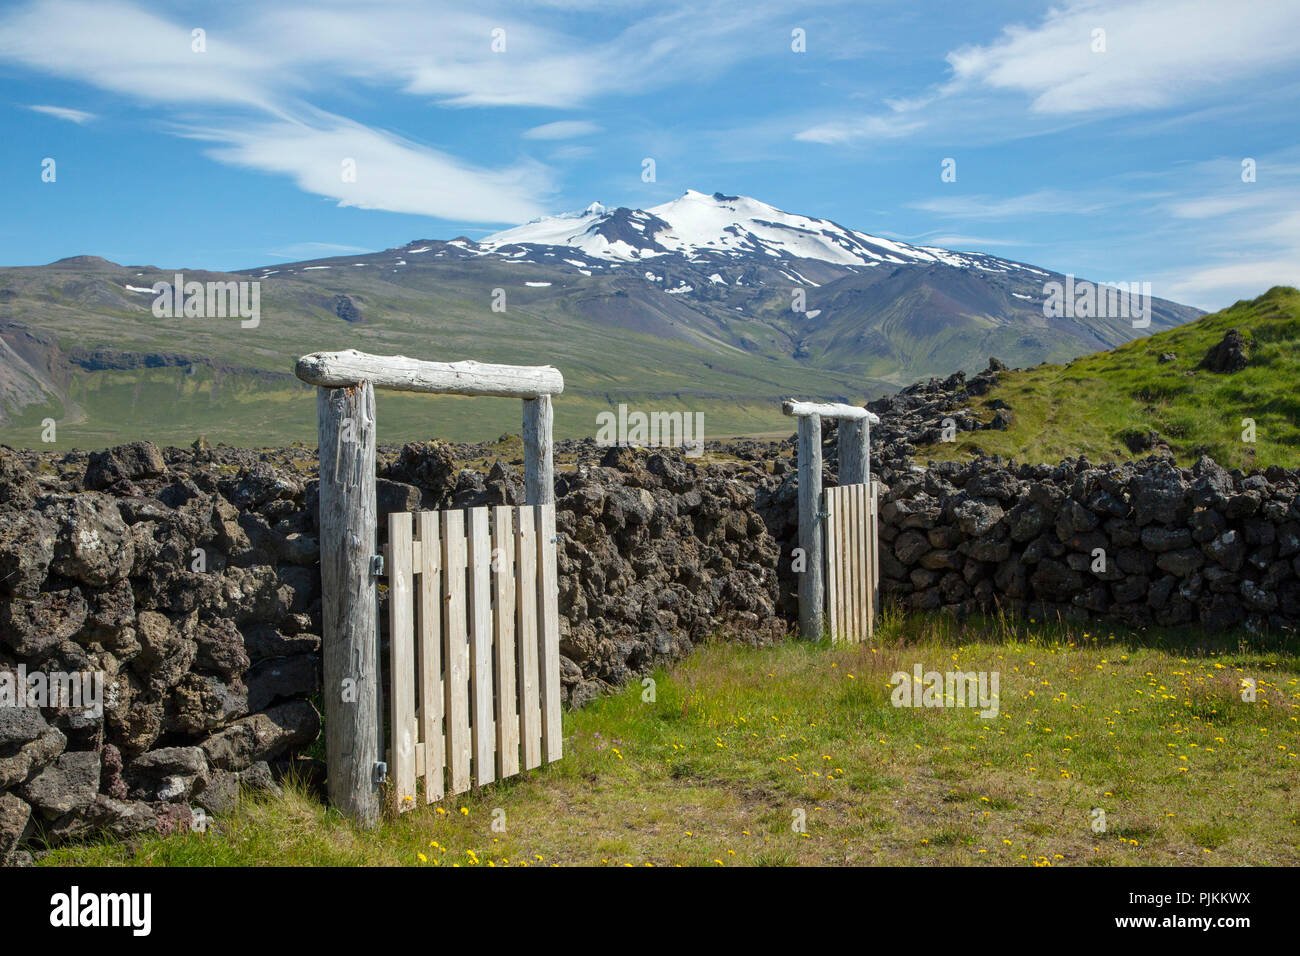 Iceland, Snaefellsjökull volcano, Snaefellsnes peninsula, sheep shed, stone walls, wooden gates, nice weather Stock Photo